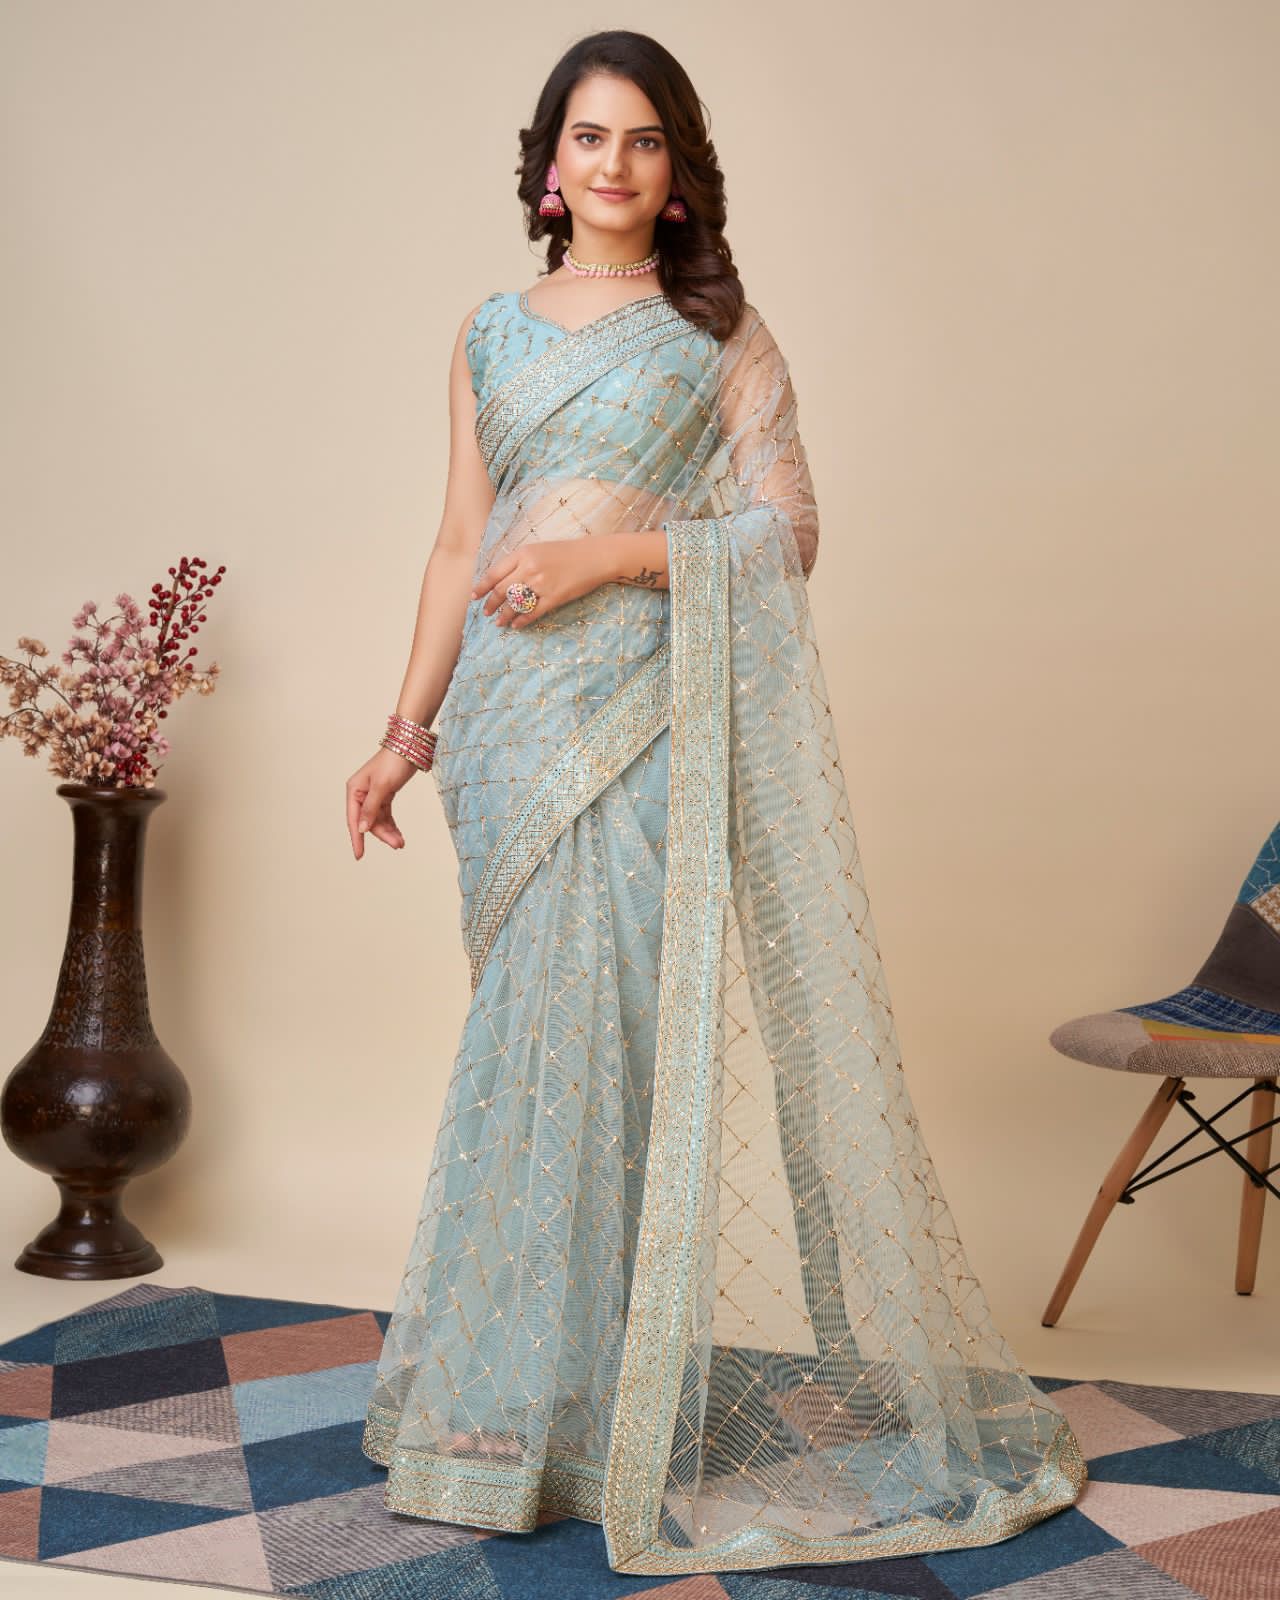 women's wear embroidery saree in NET Fabric